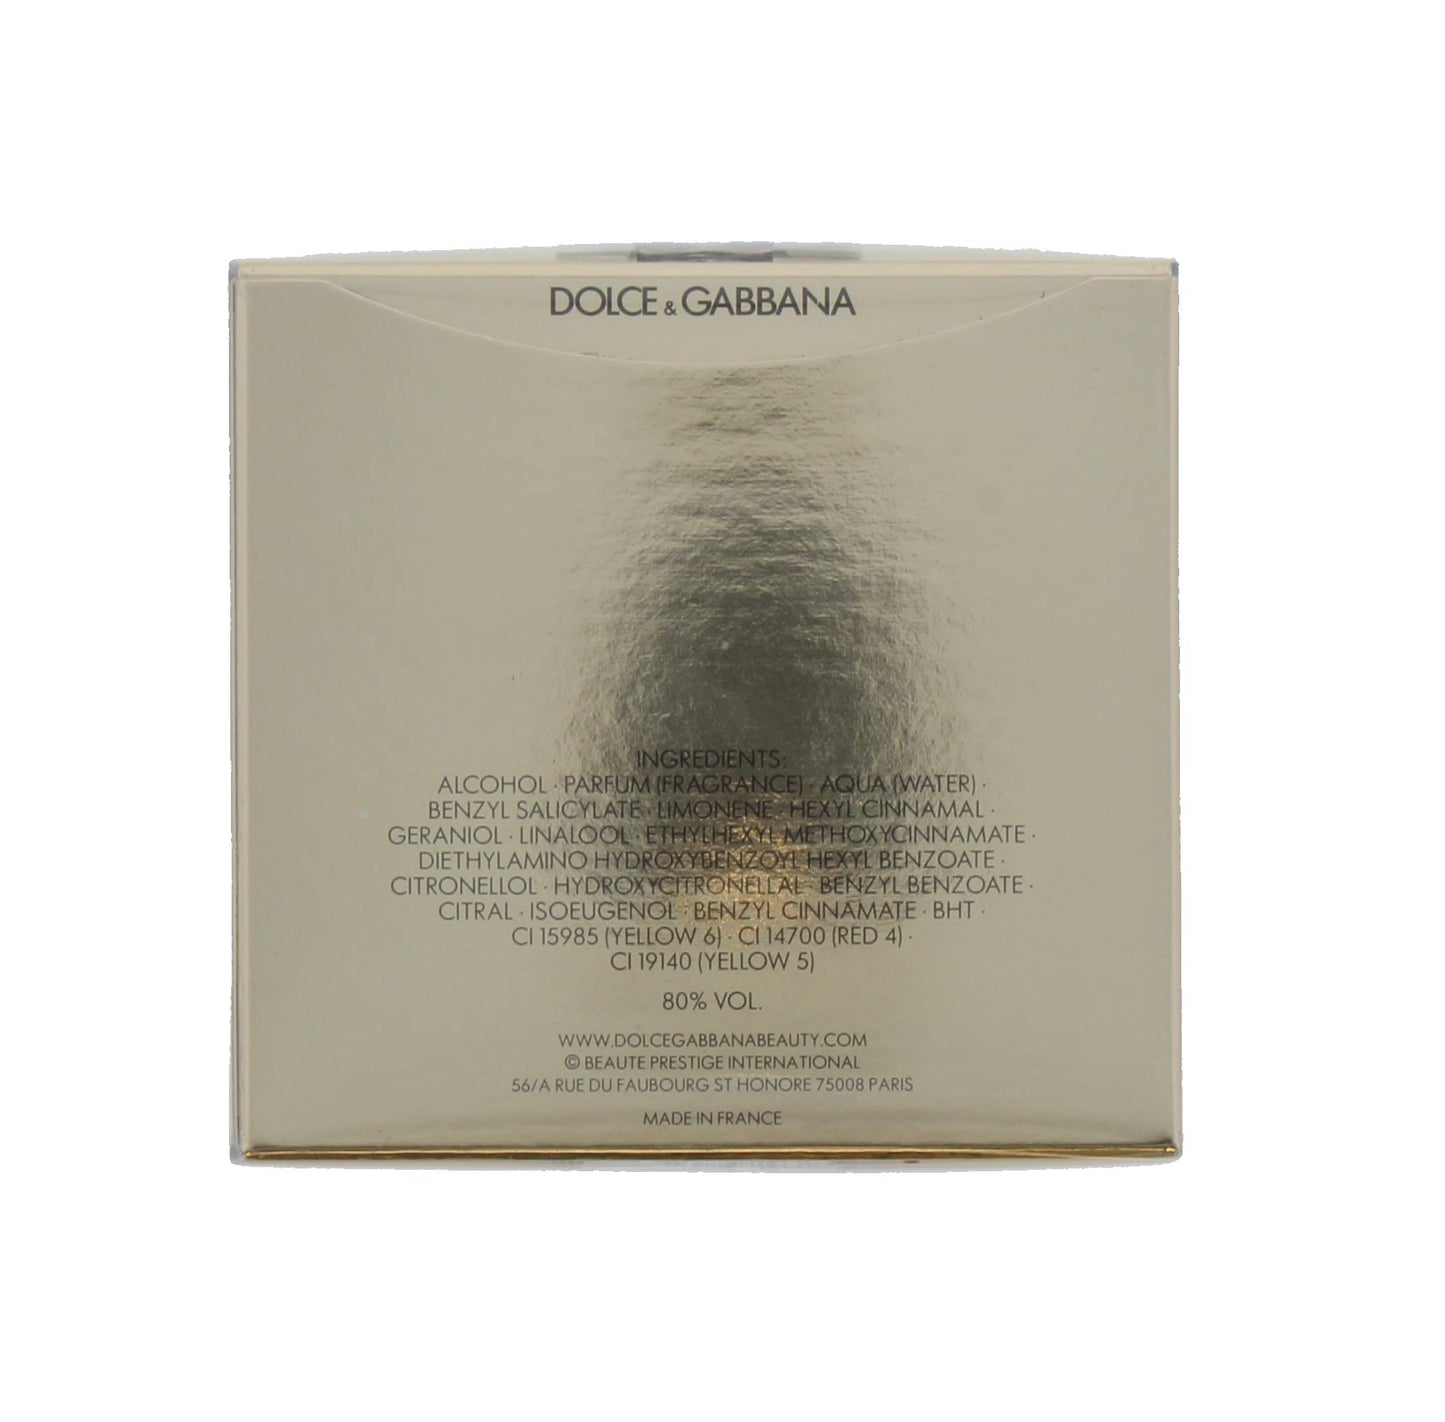 The One by Dolce & Gabbana for Women - Eau de Parfum, 75ml